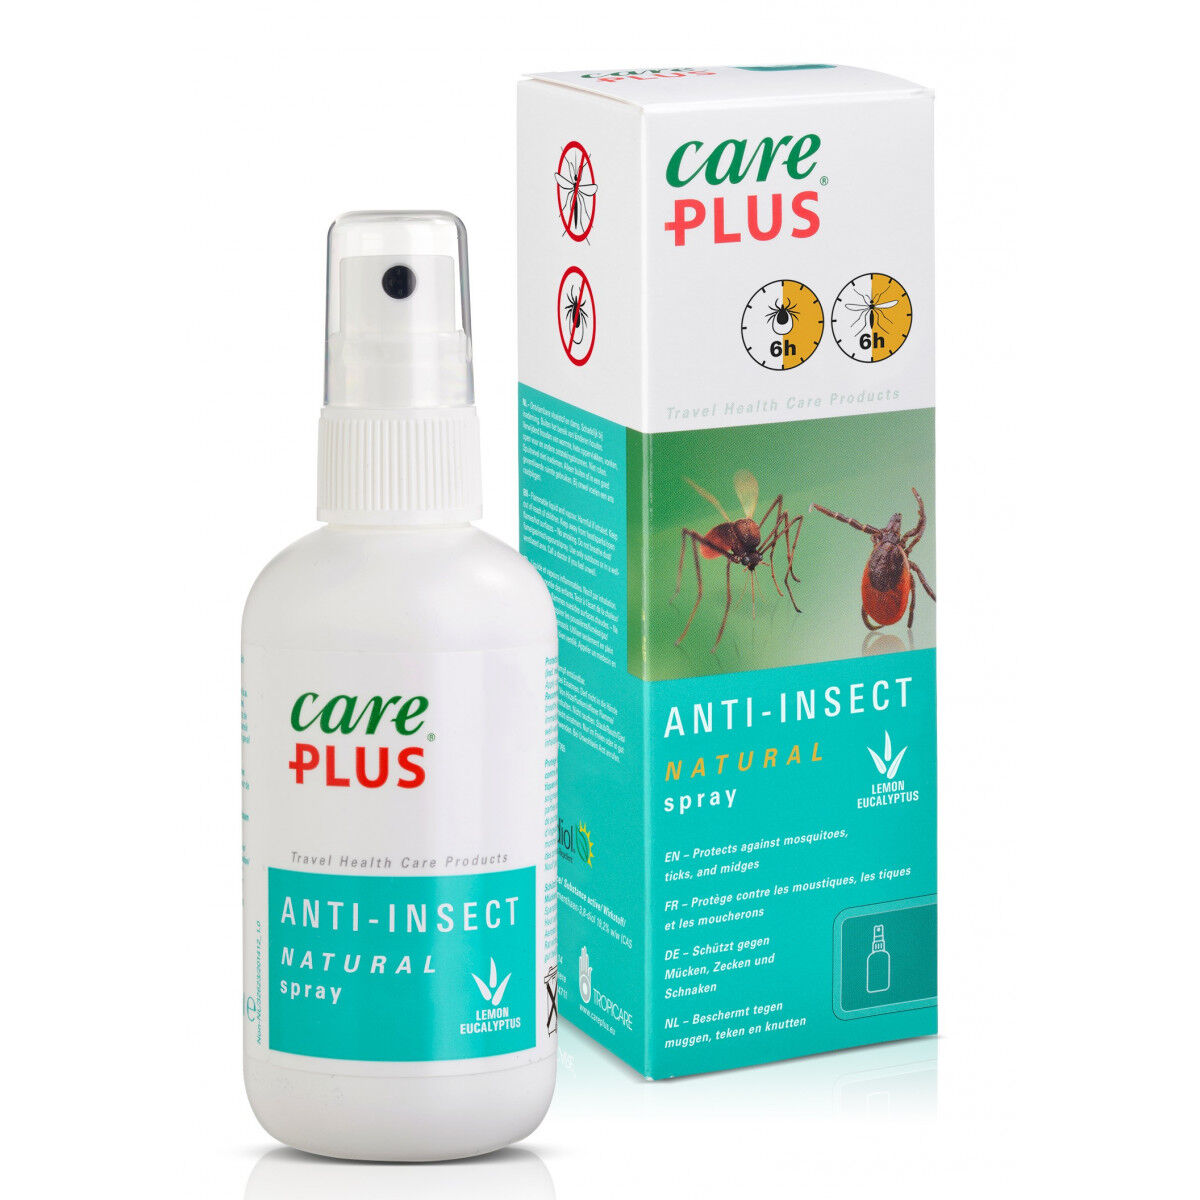 Plus - Natural spray Citriodiol - Insectenbescherming